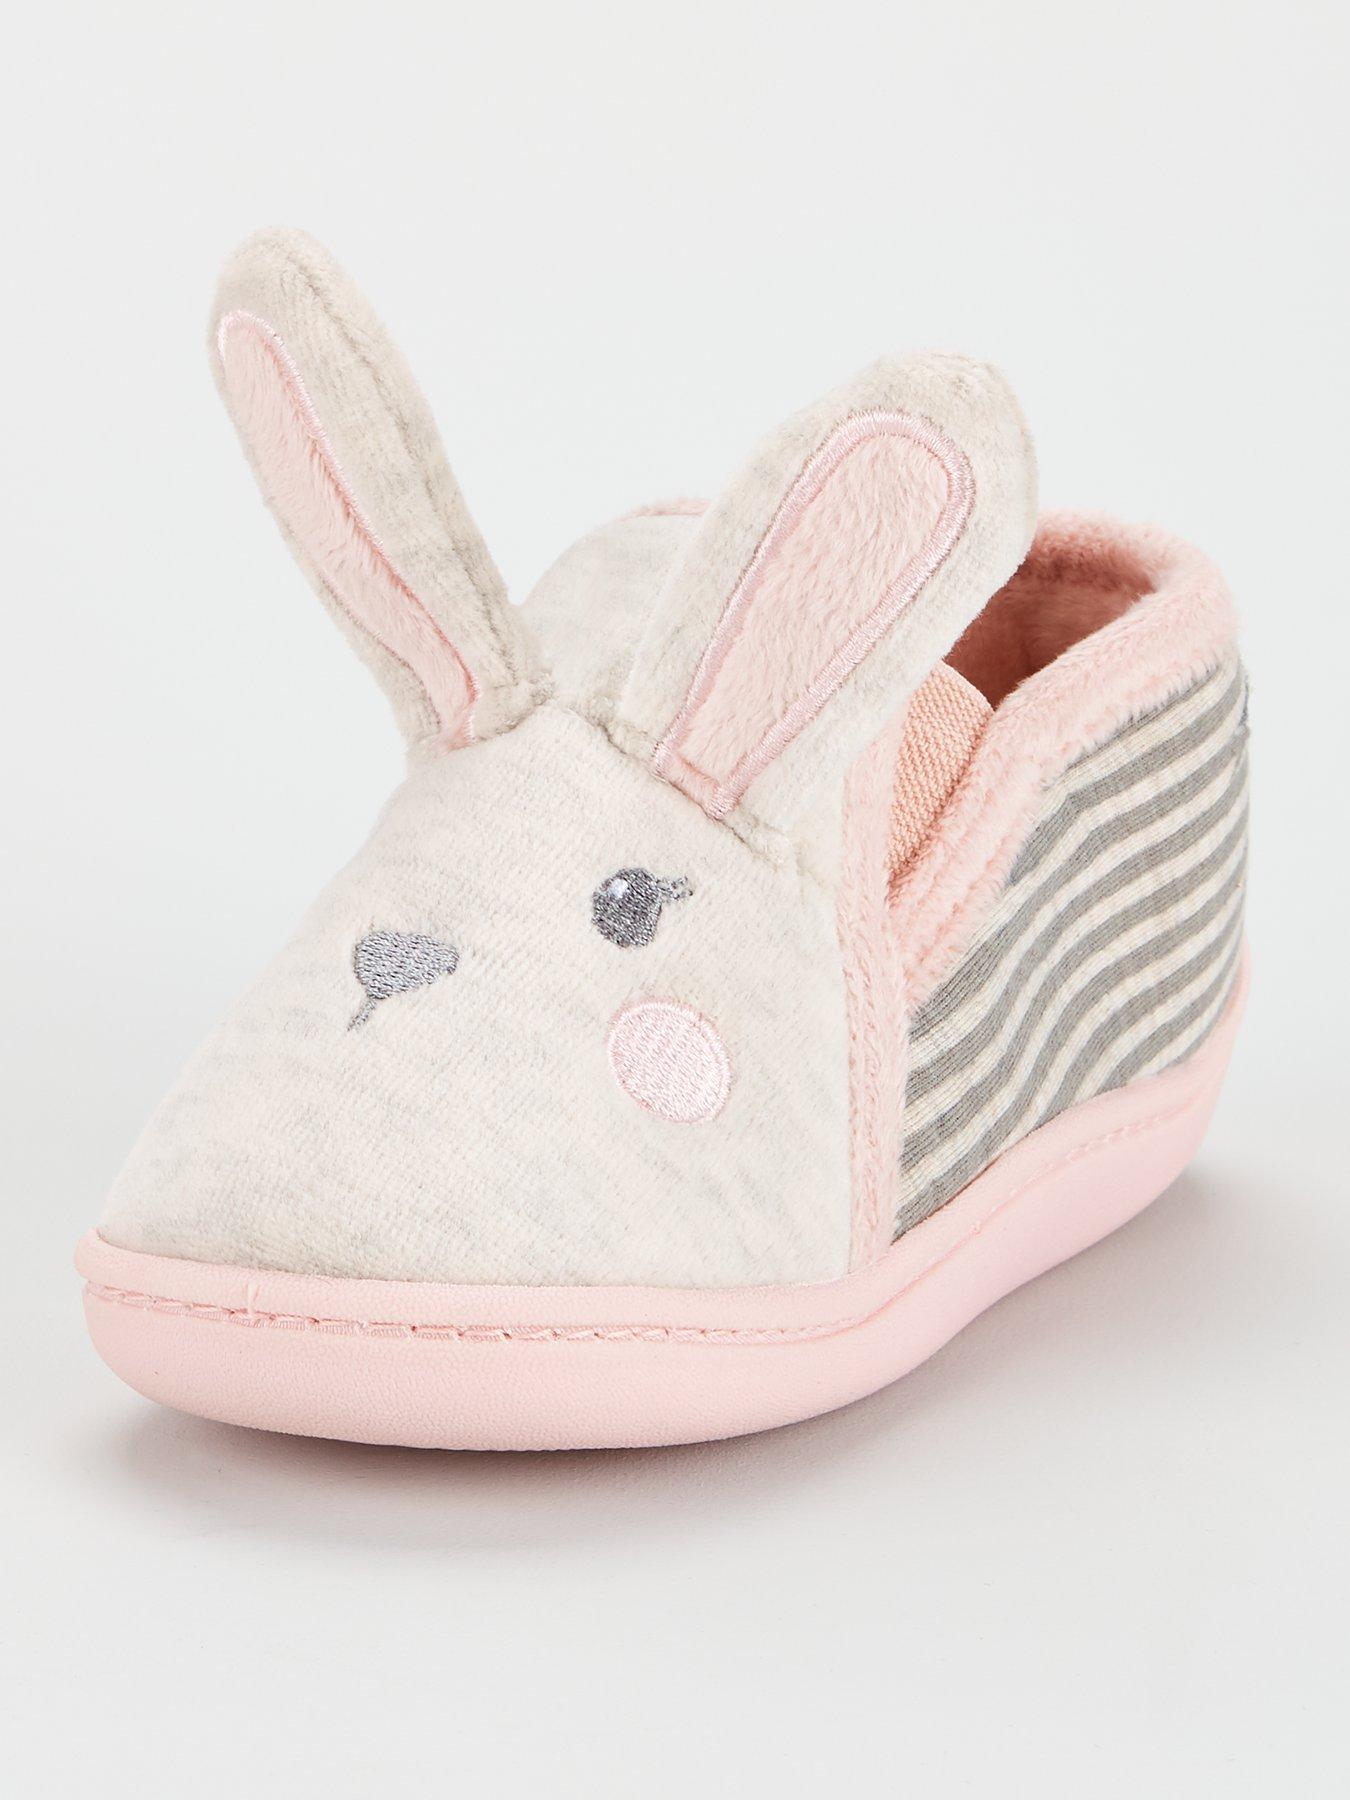 rabbit slippers baby